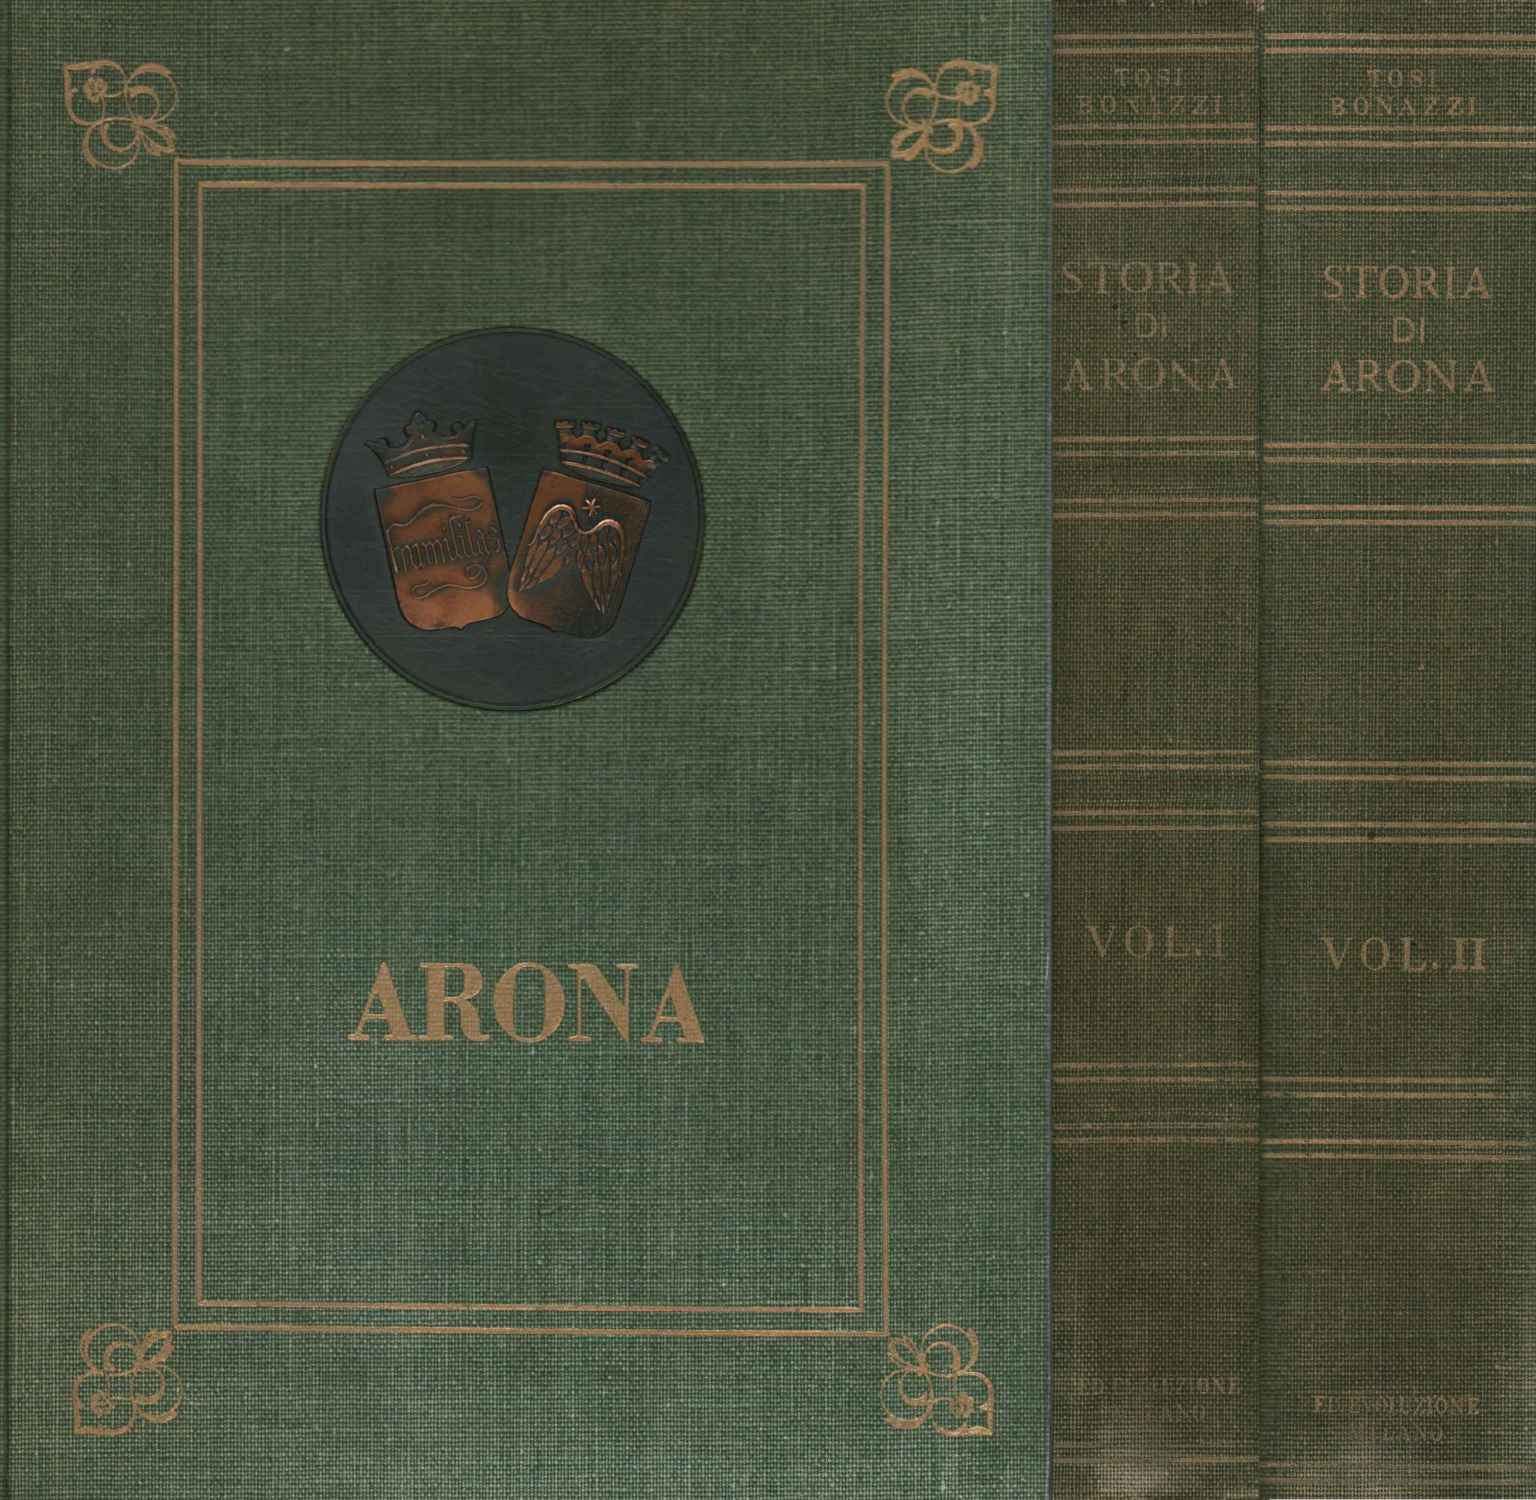 History of Arona (2 Volumes)